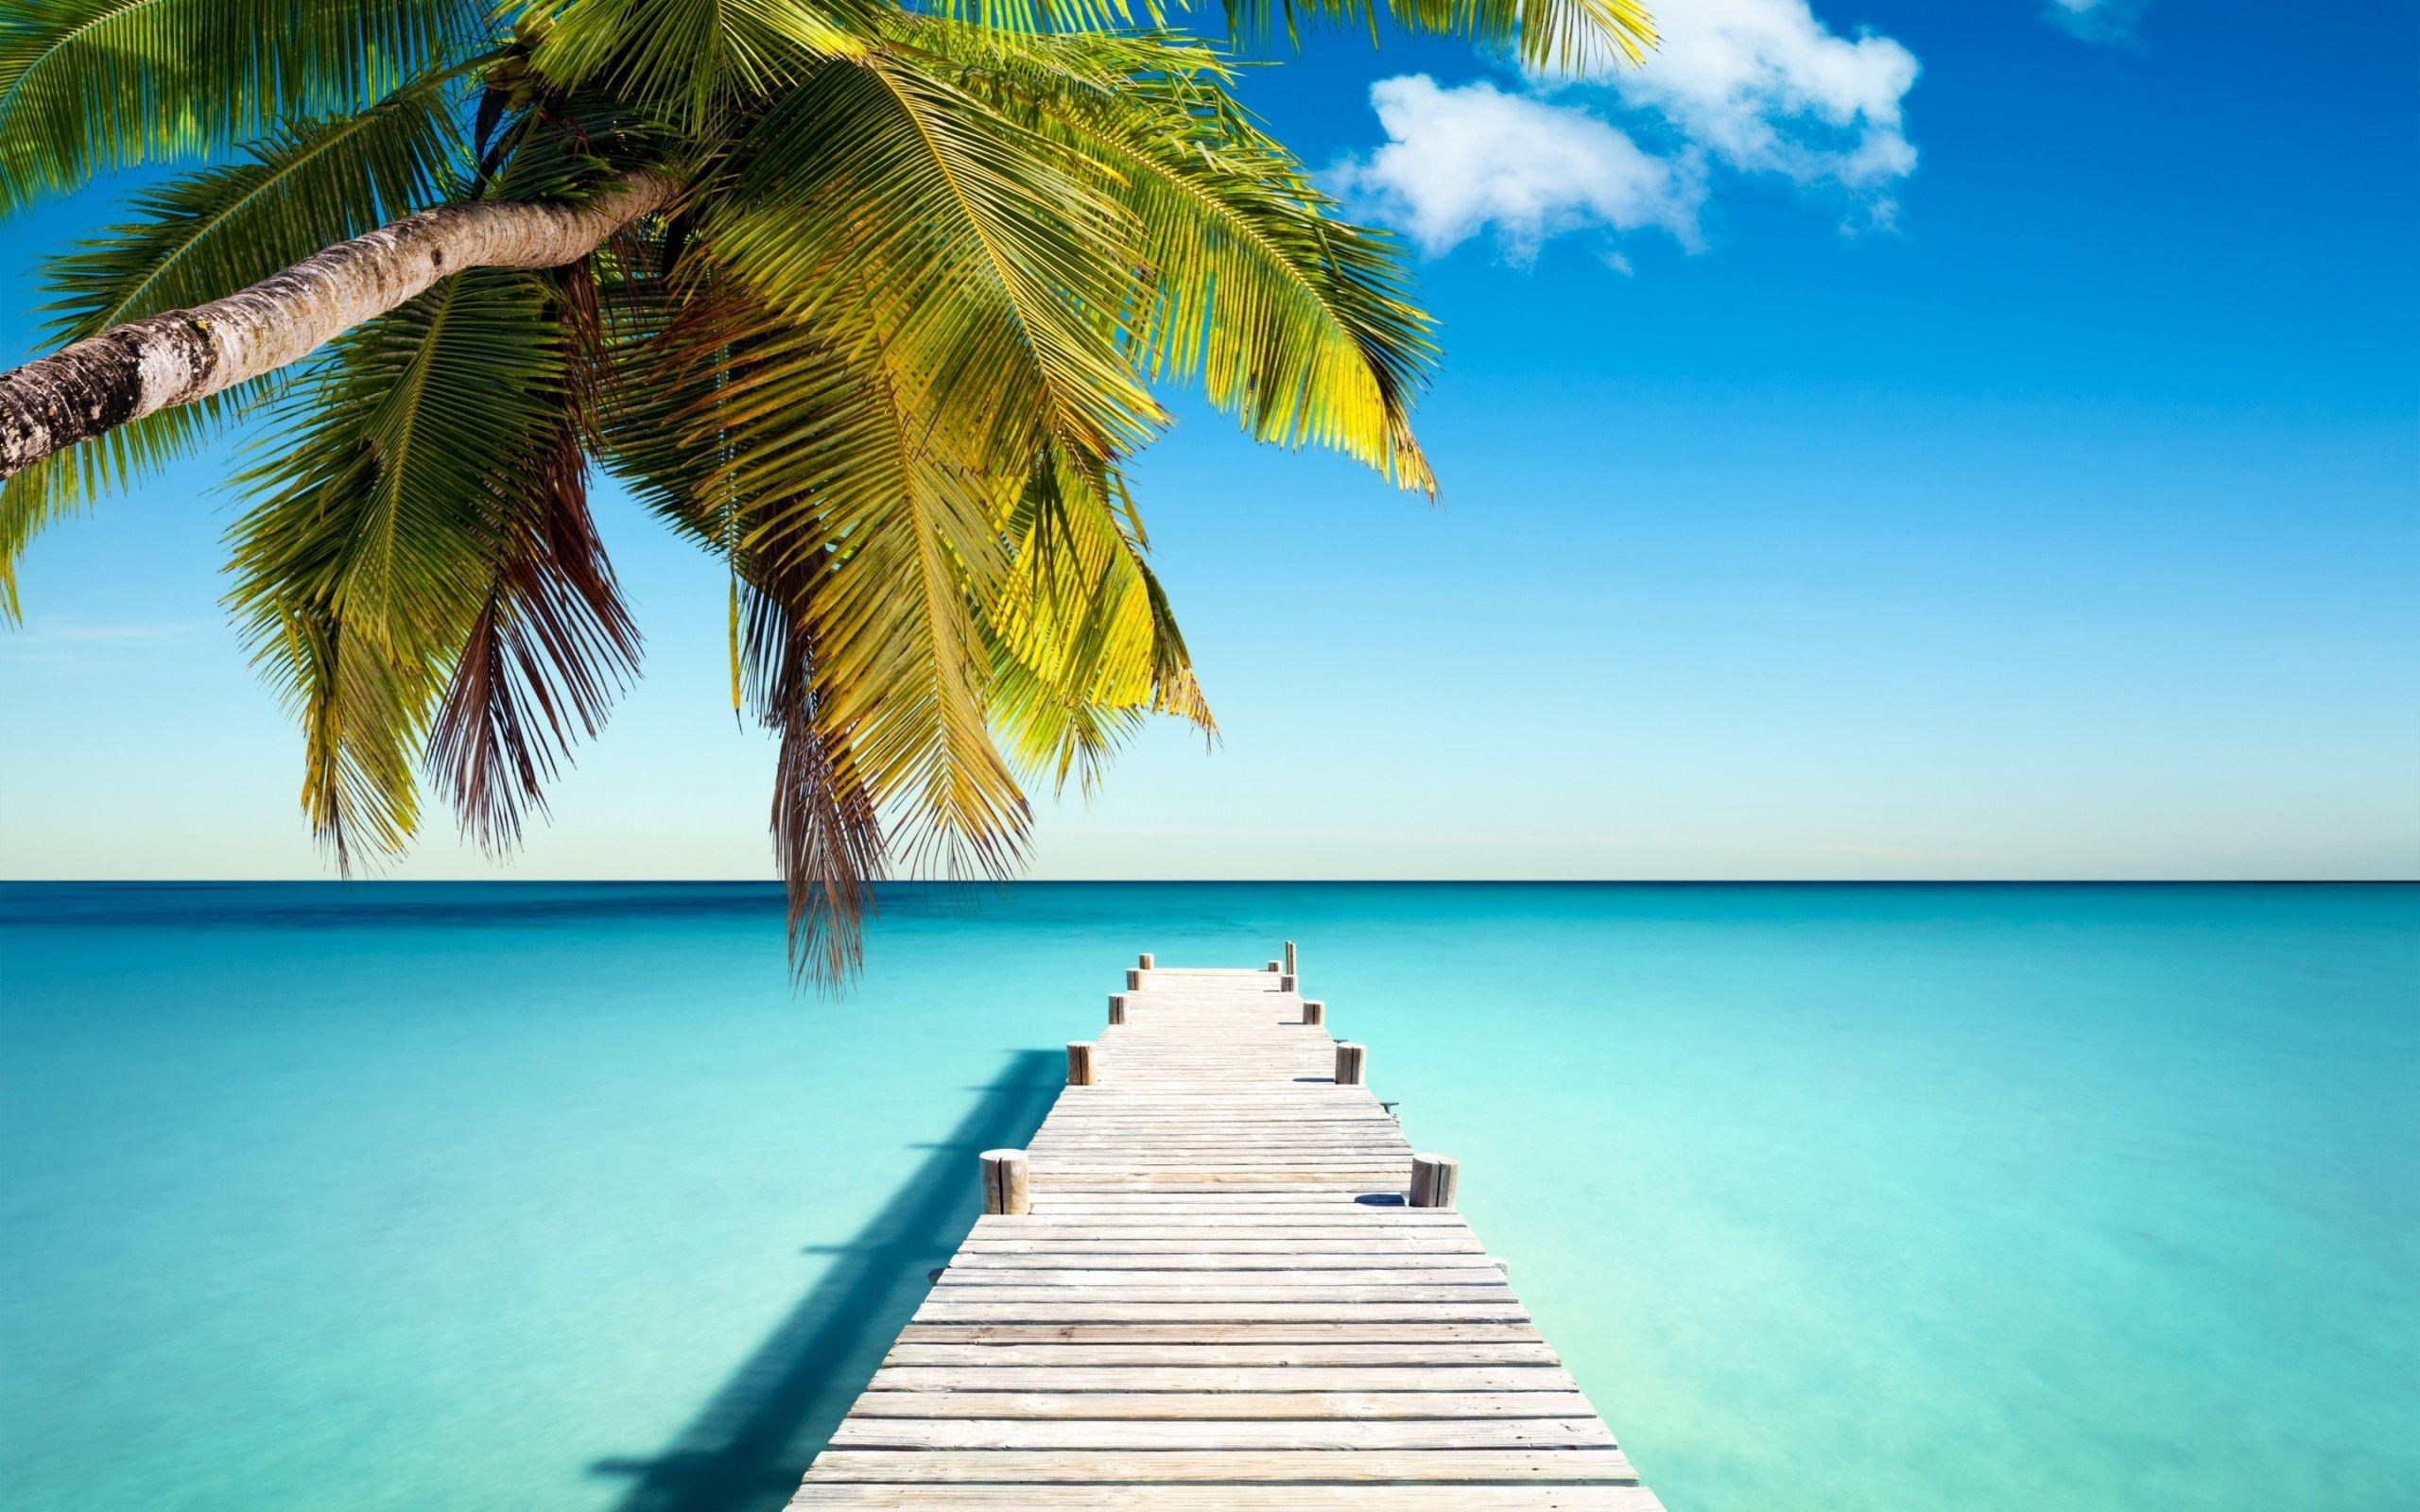 Palm Tree, Boardwalk and the Ocean widescreen wallpaper. Wide